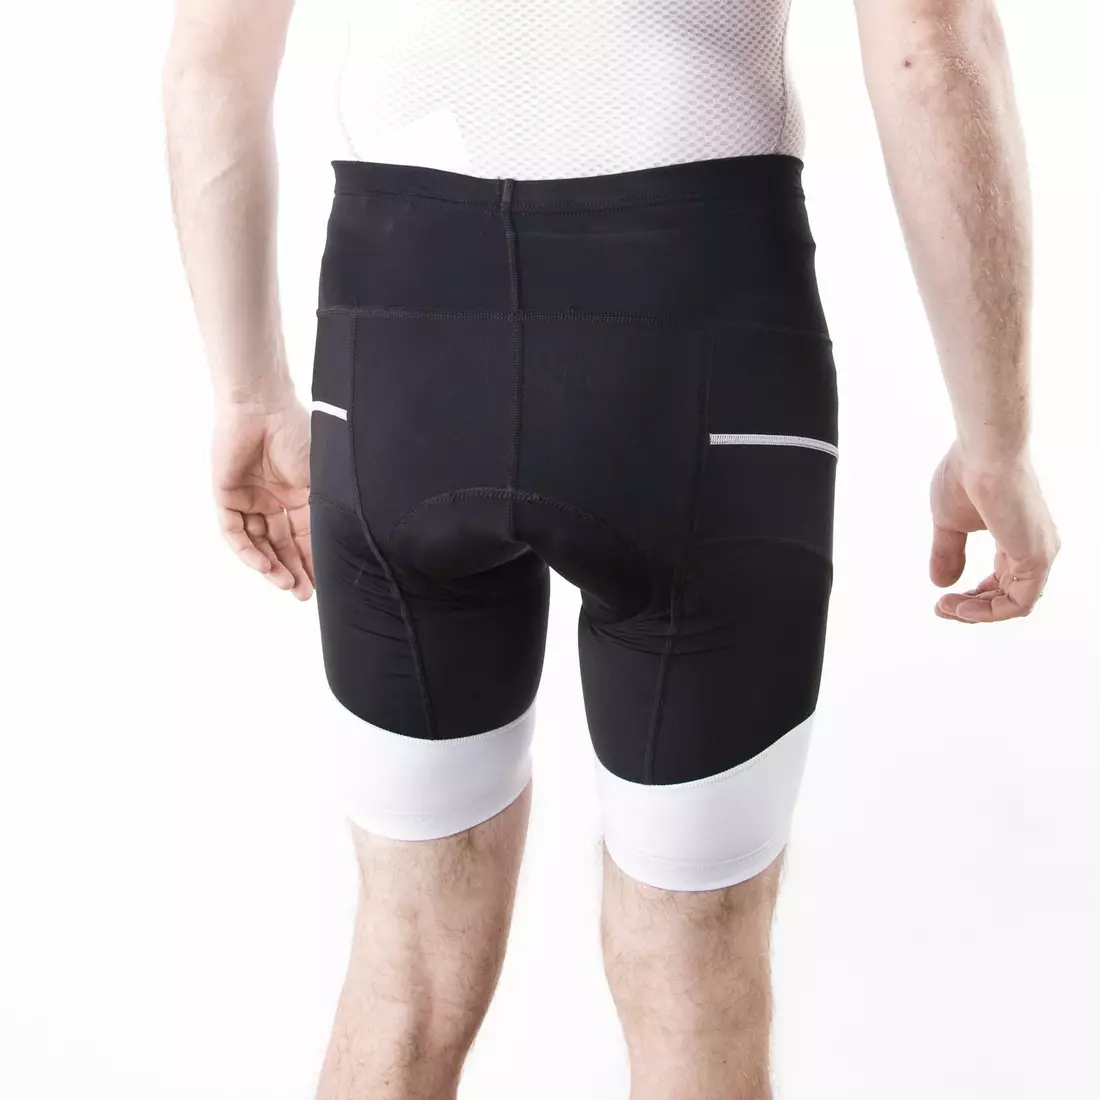 DEKO CLASSIC men's cycling shorts, black and white